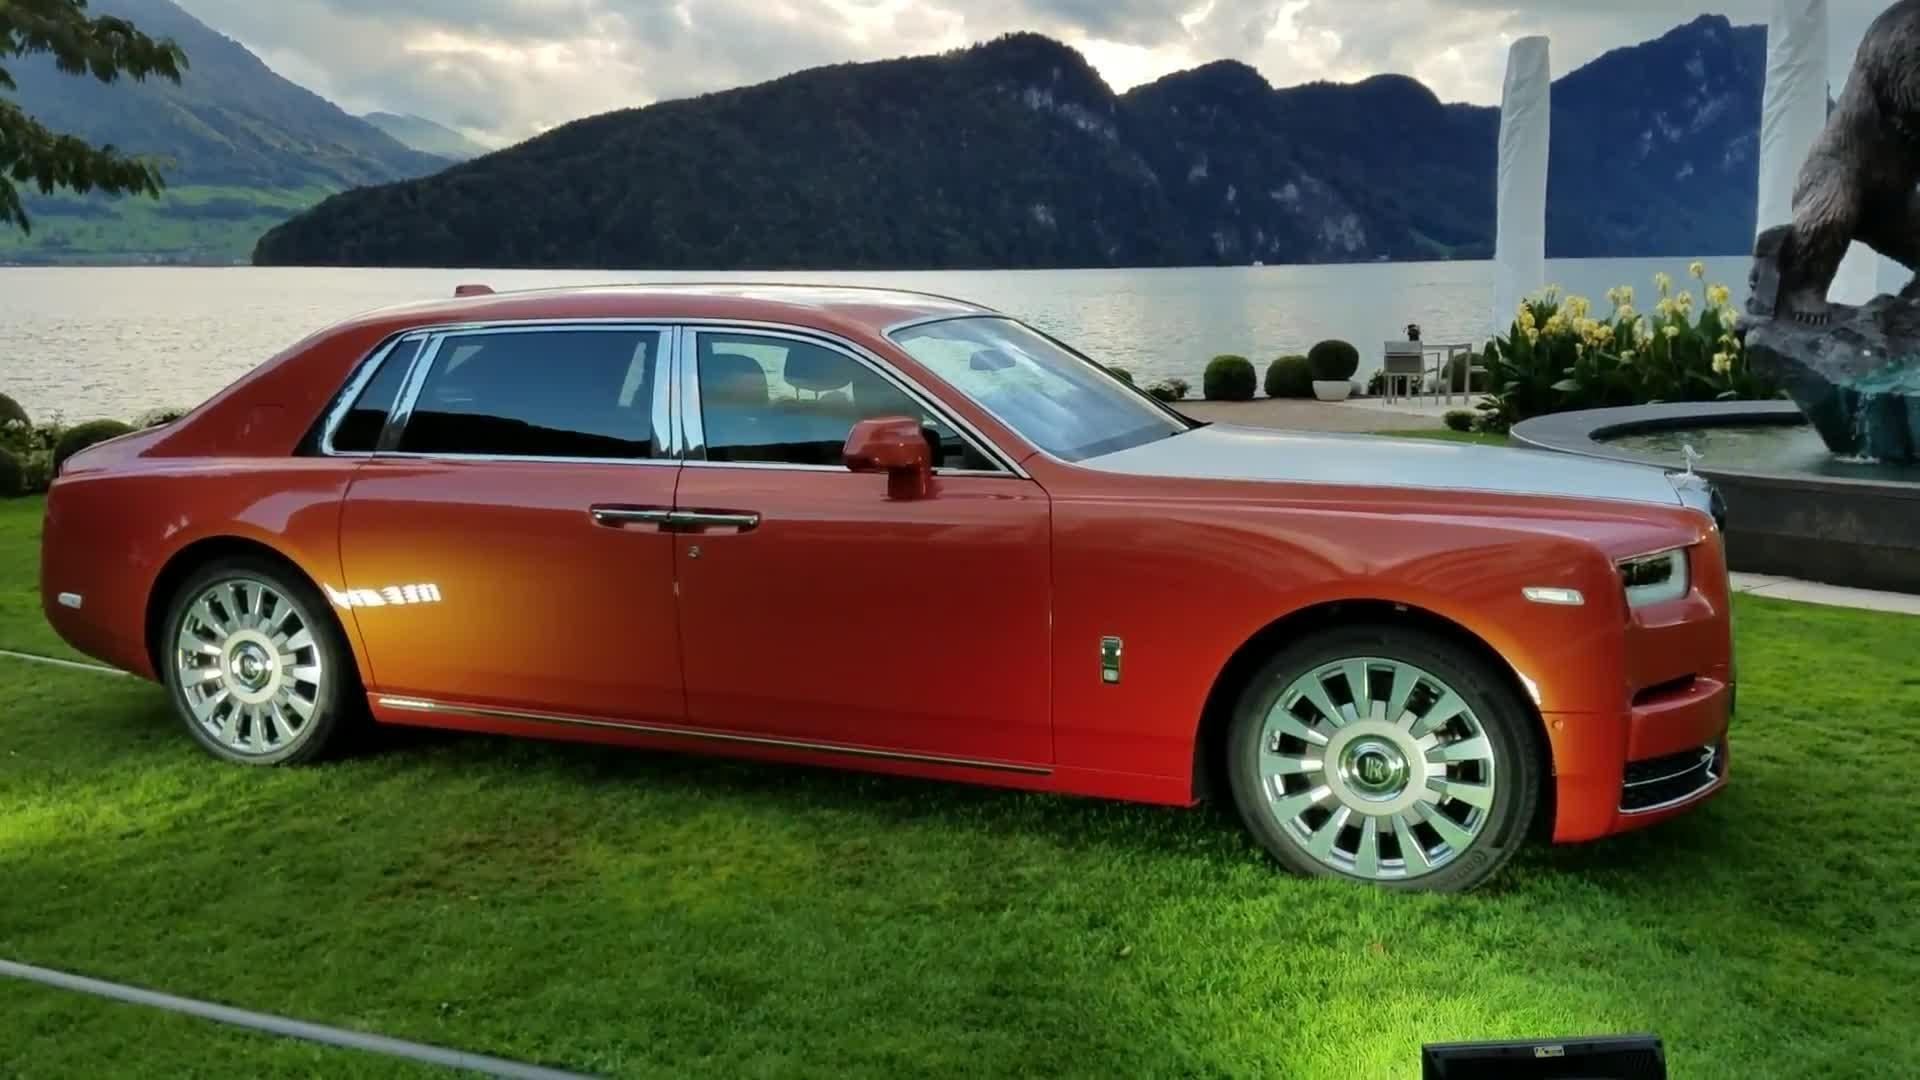 The Phantom Based Rolls Royce Cullinan Crossover SUV Is Coming Soon